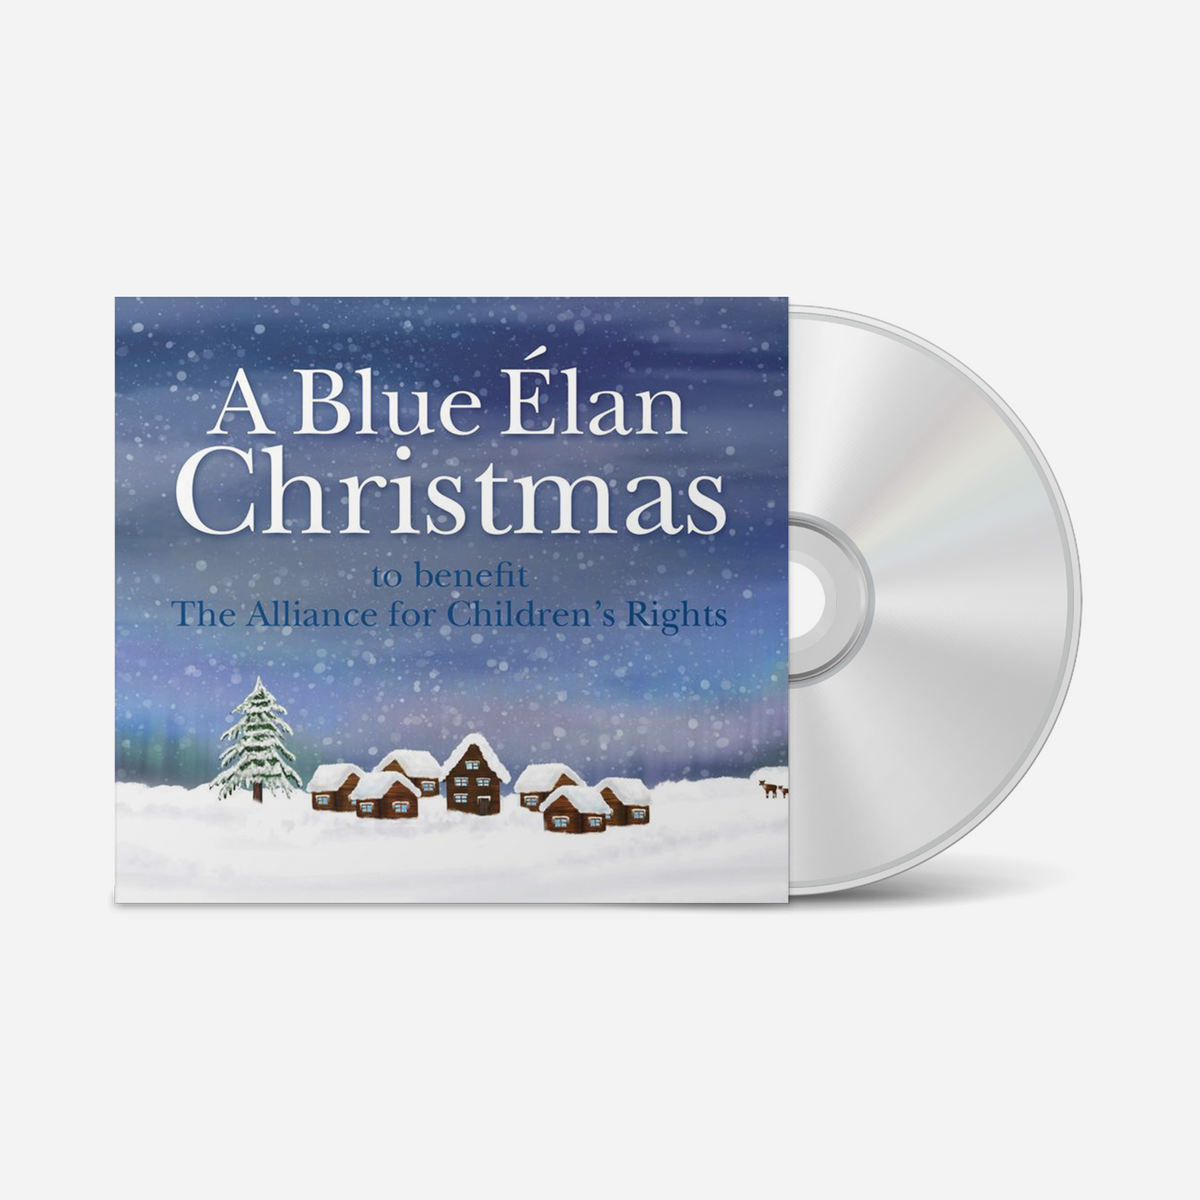 A Blue Élan Christmas - CD Collection